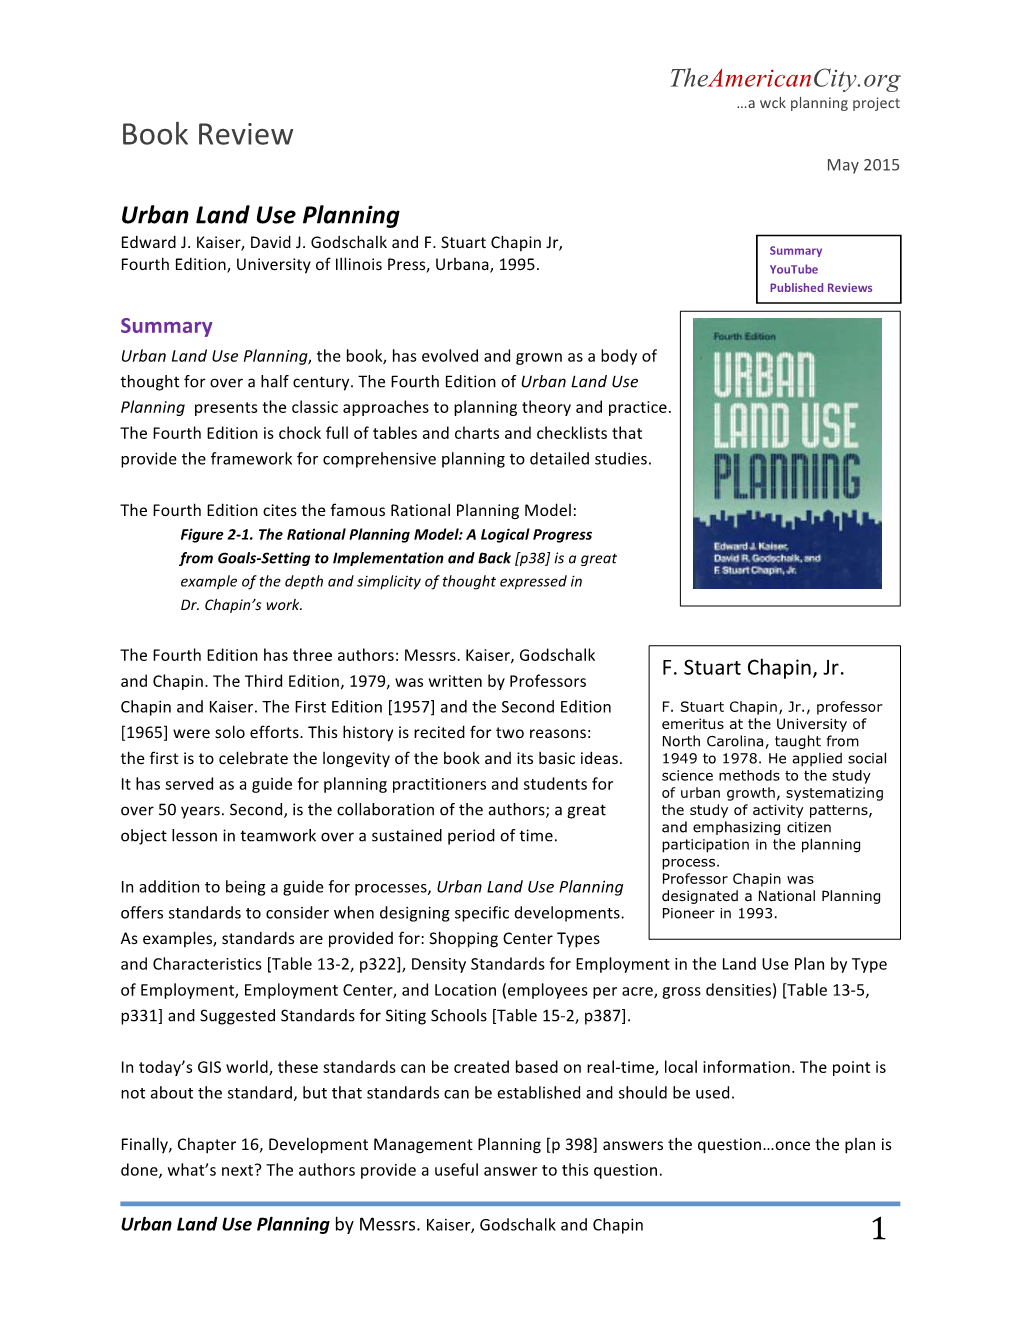 Urban Land Use Planning 6.2.15